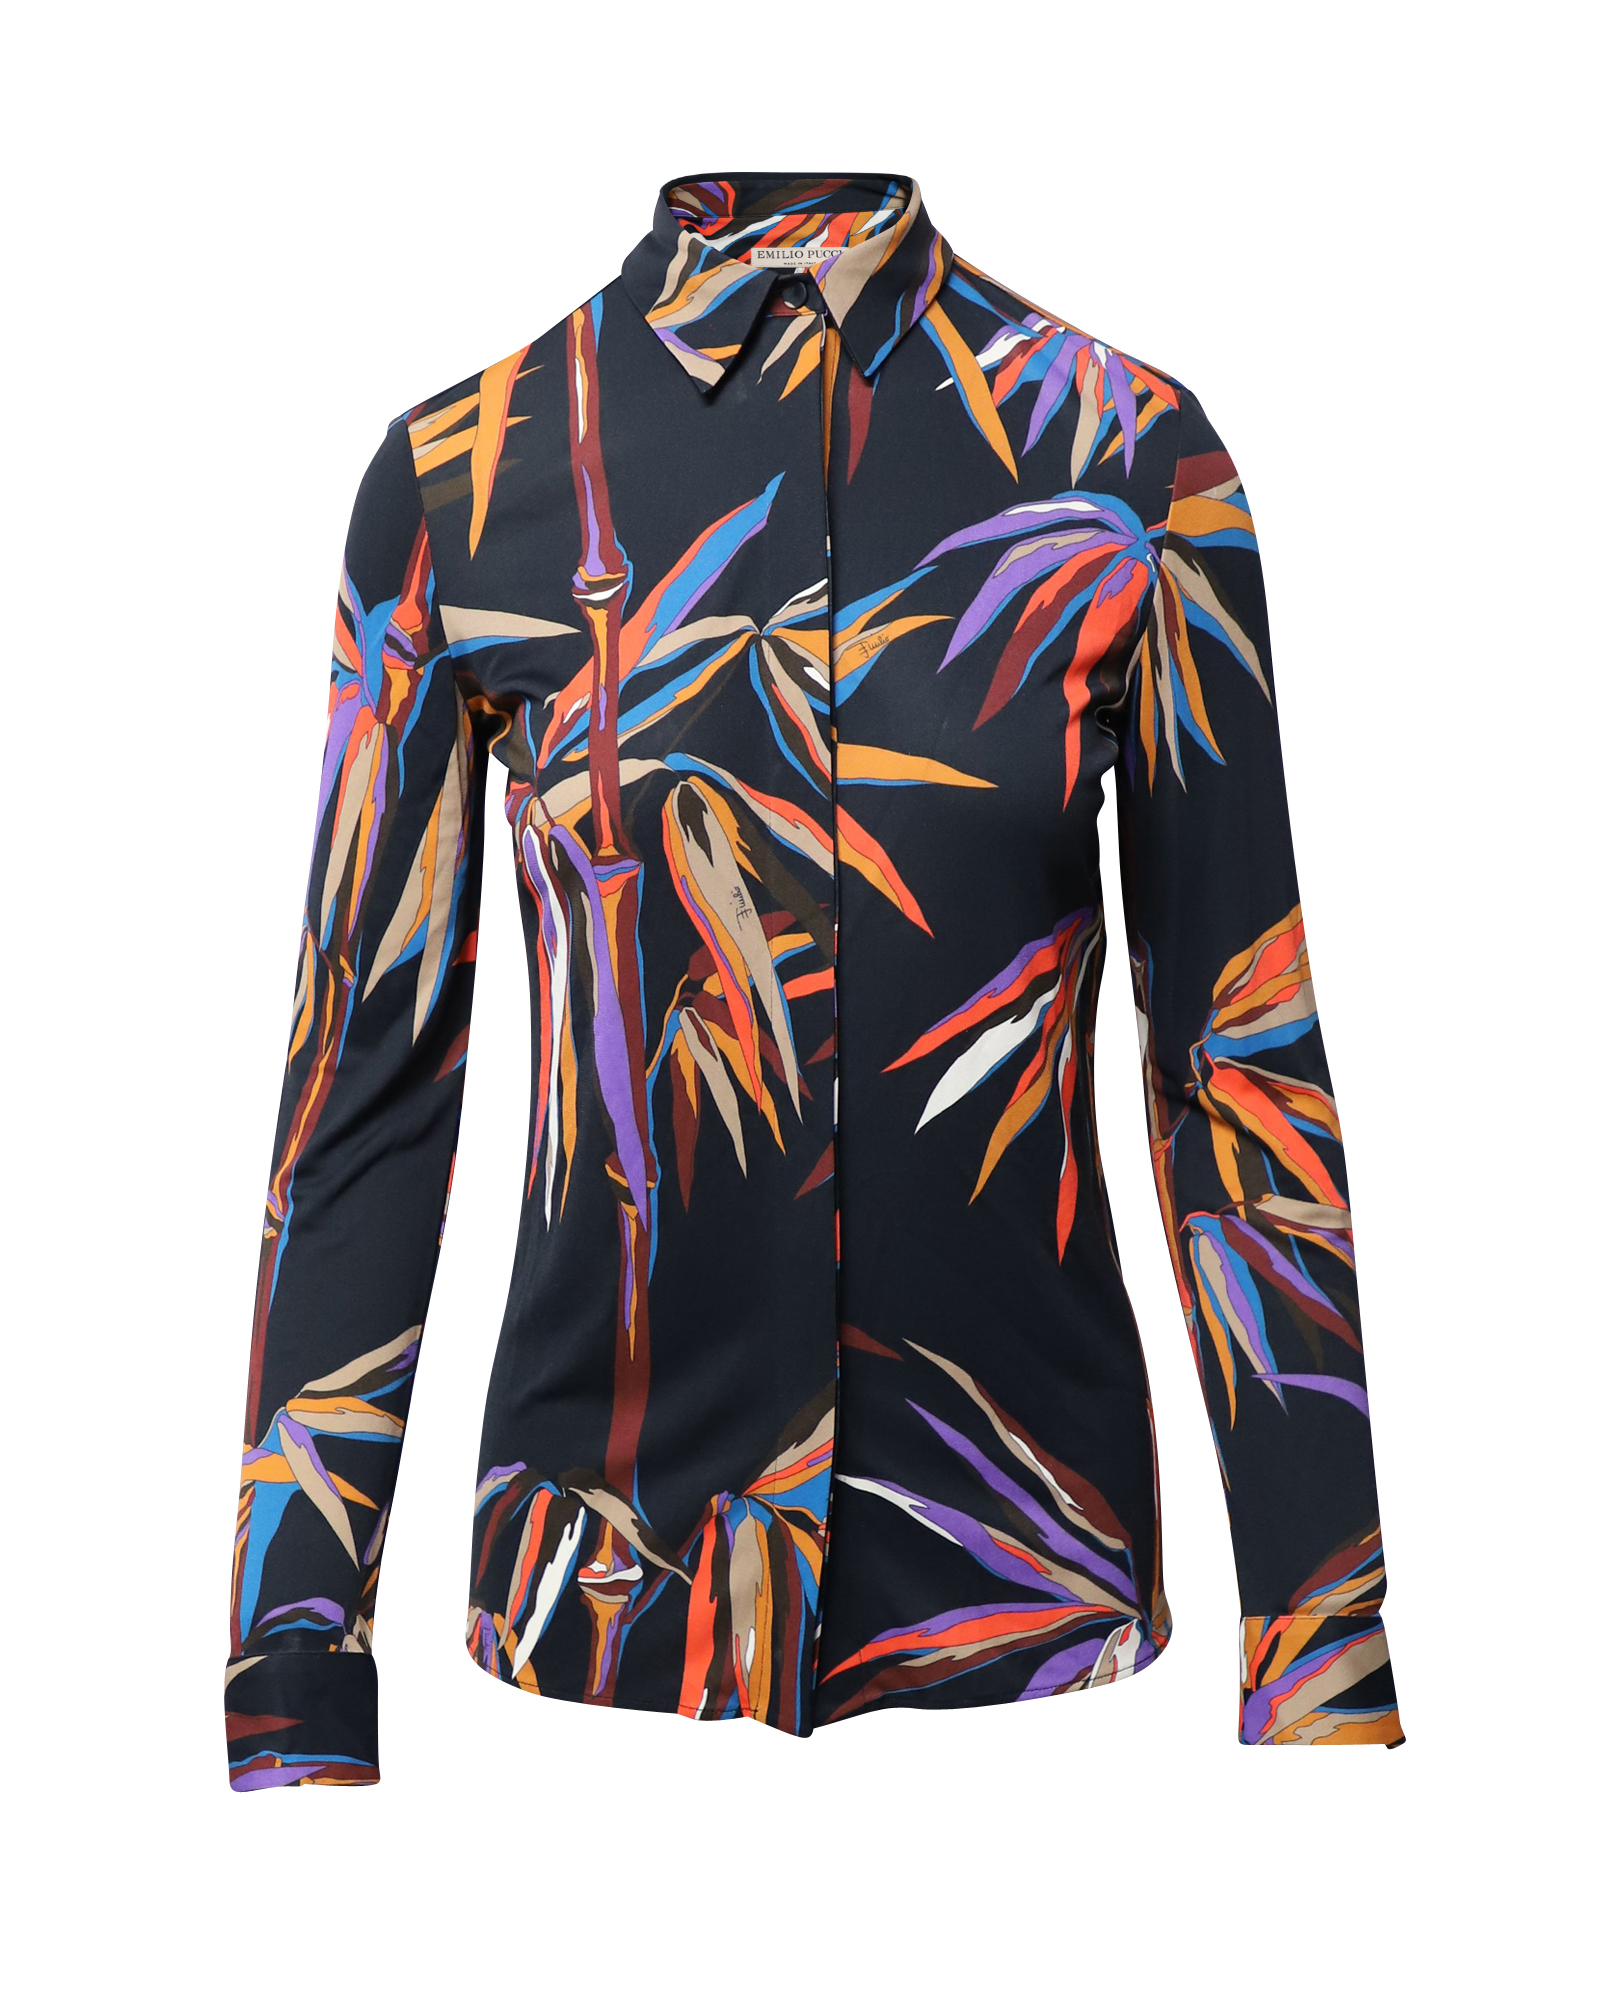 Vibrant Emilio Pucci Printed Silk Shirt